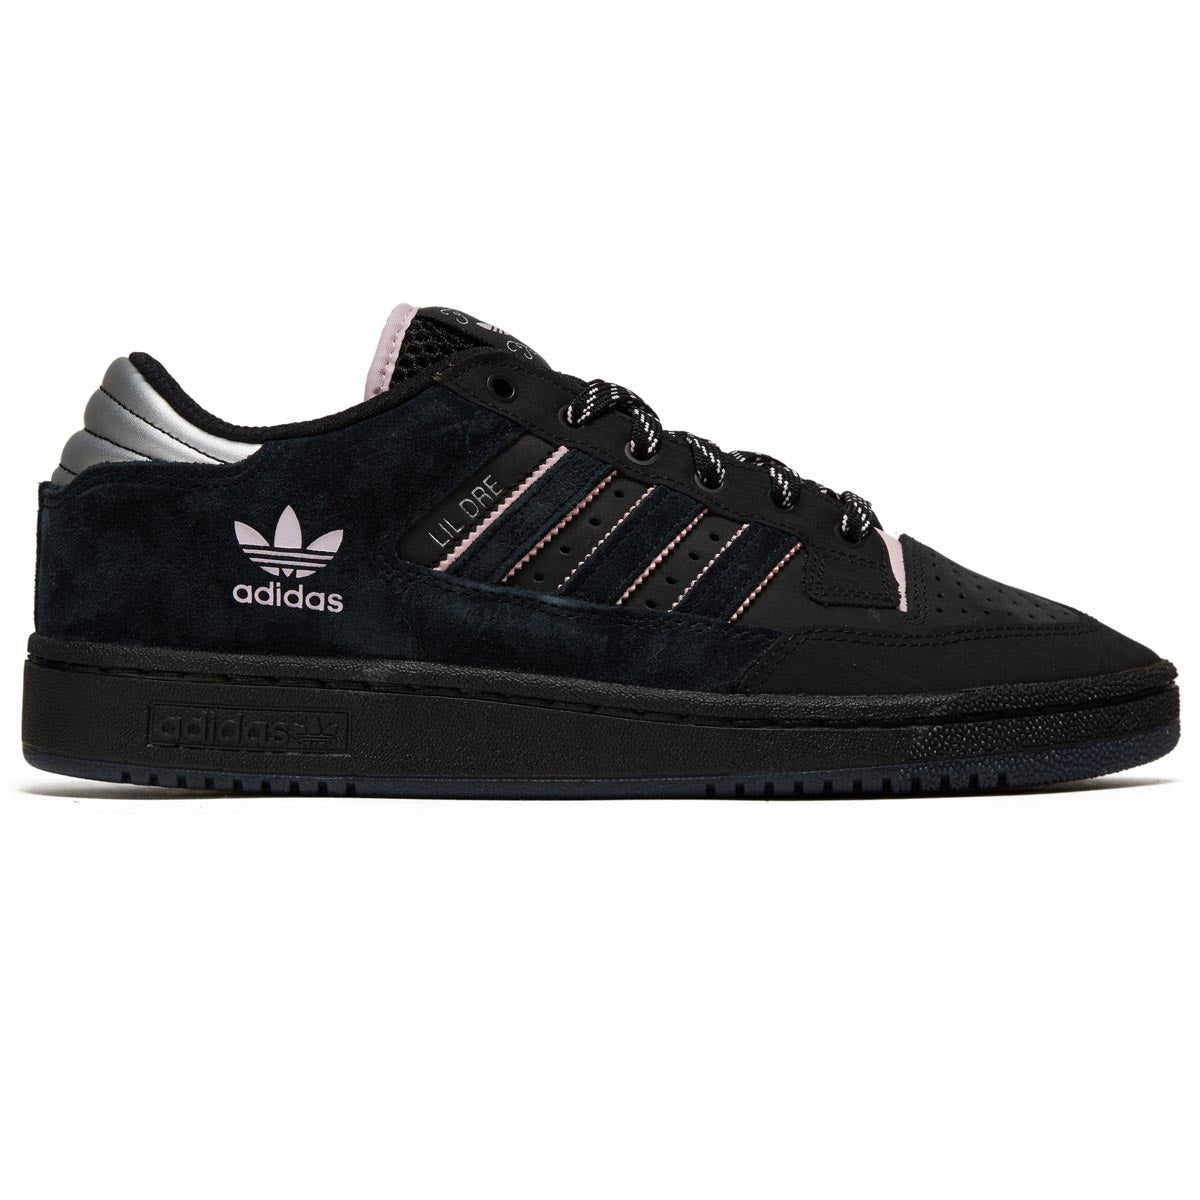 Adidas Centennial 85 Lo ADV x Dre Shoes - Core Black/Clear Pink/Core Black image 1